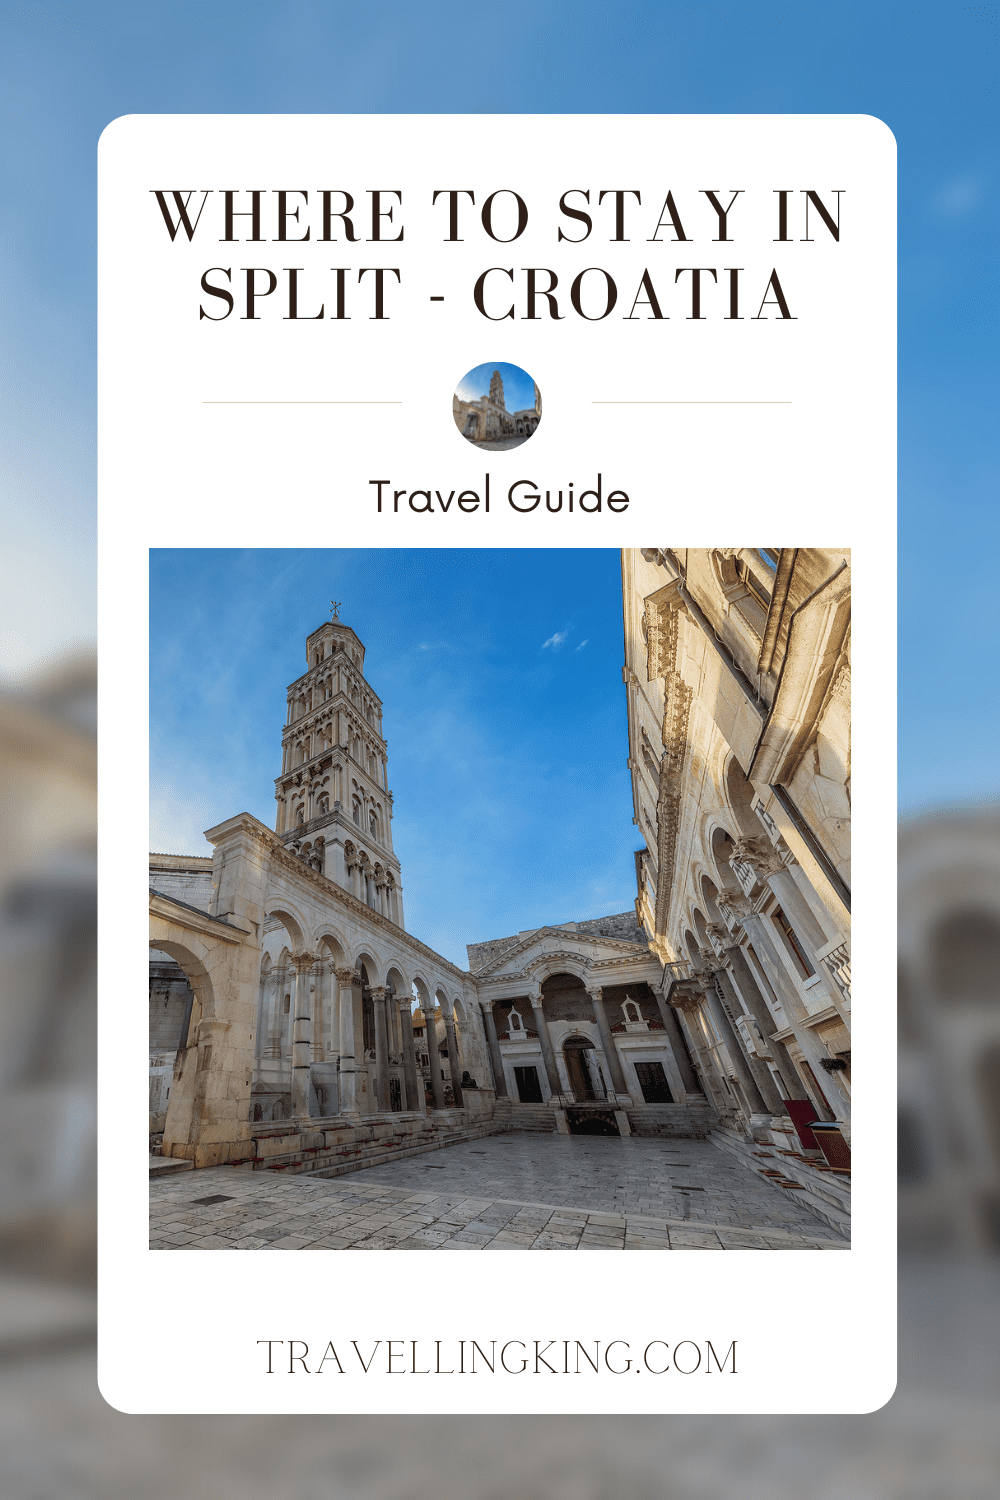 Where to stay in Split - Croatia